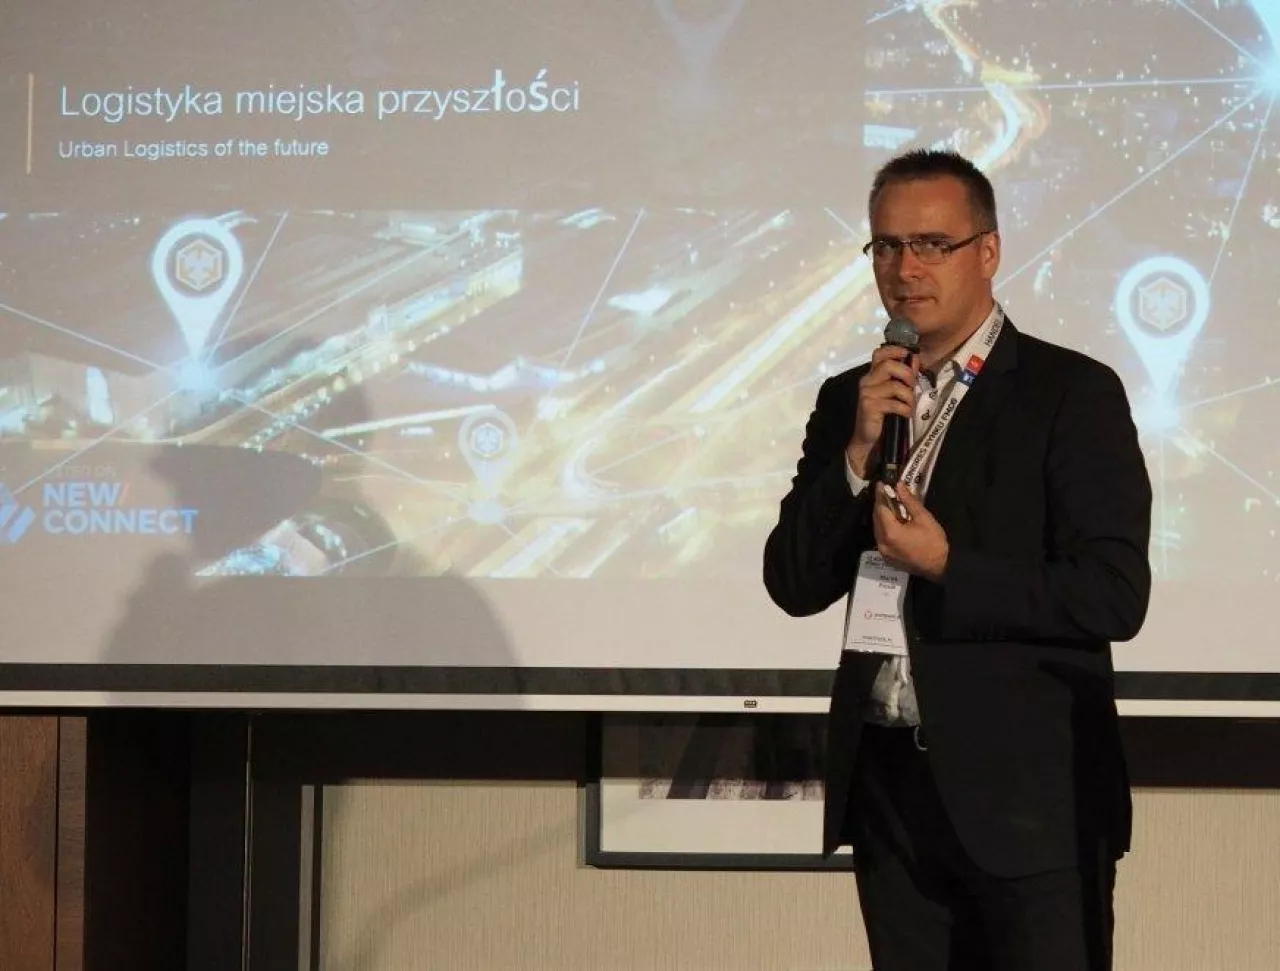 Marek Piosik, CEO firmy Pointpack.pl (fot. ŁR, wiadomoscihandlowe.pl)